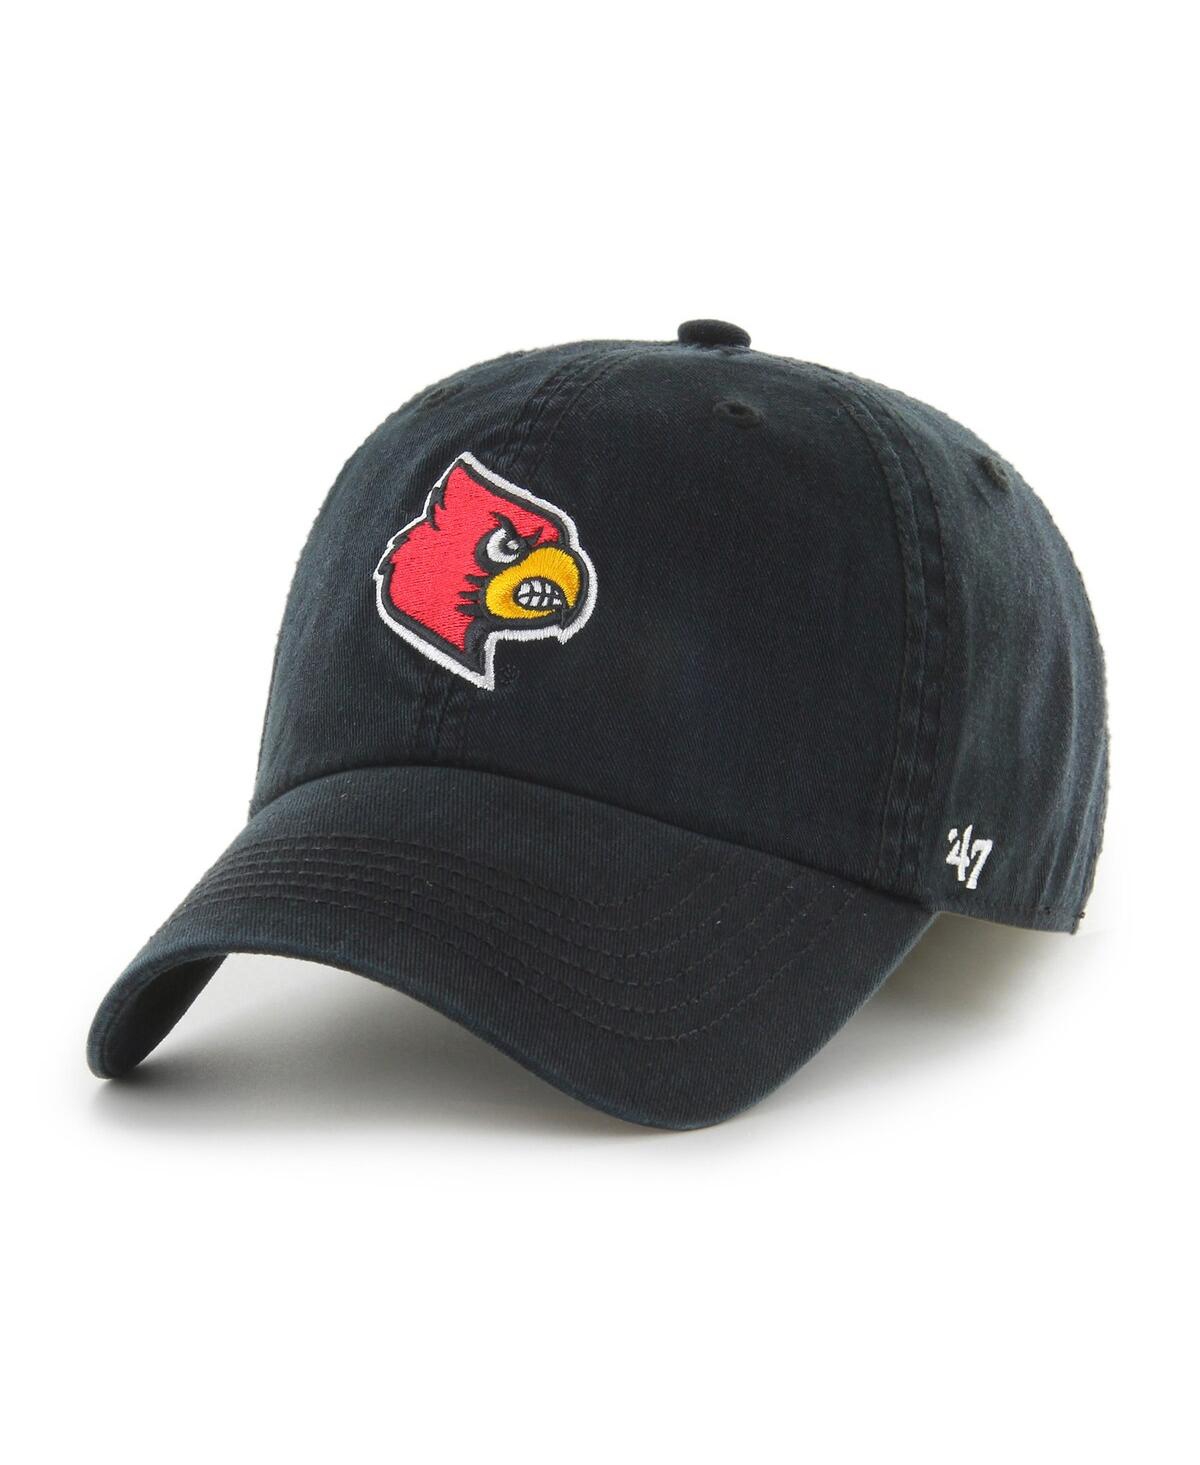 47 Brand Men's ' Black Louisville Cardinals Franchise Fitted Hat